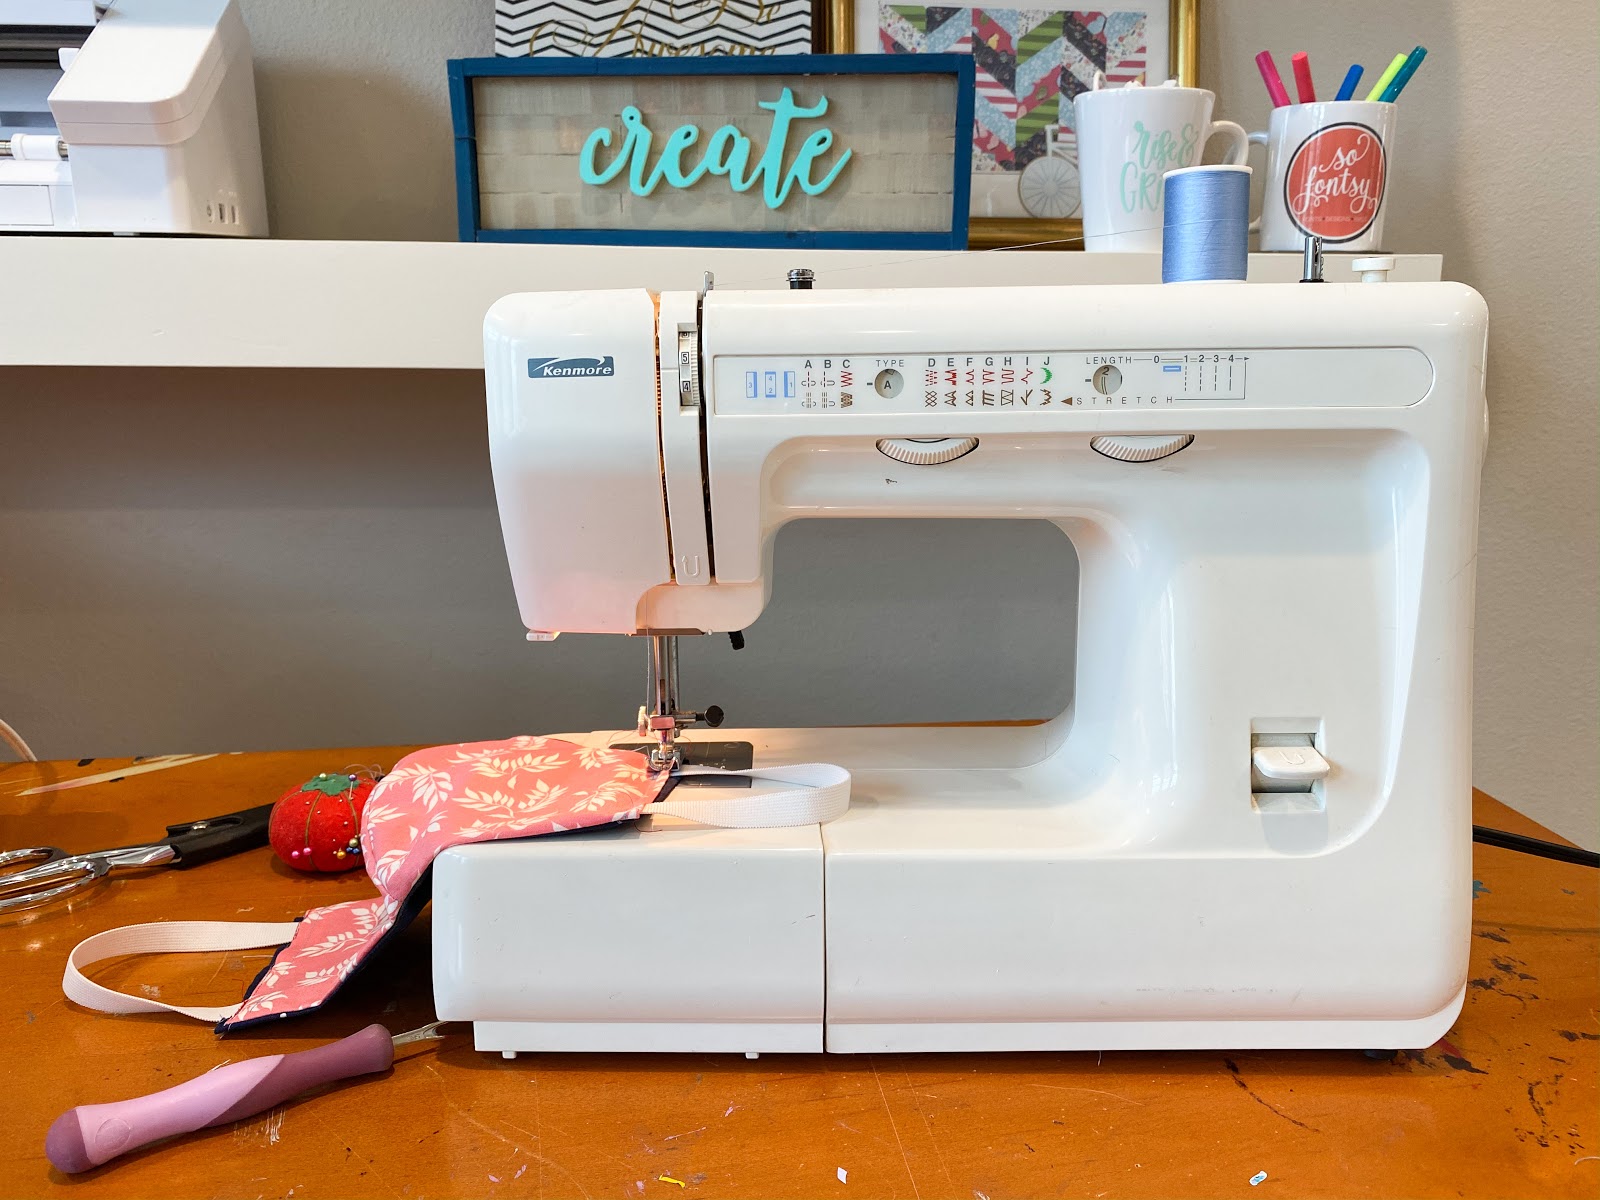 Kenmore 385 Series Sewing Machine Beginner Tutorials 